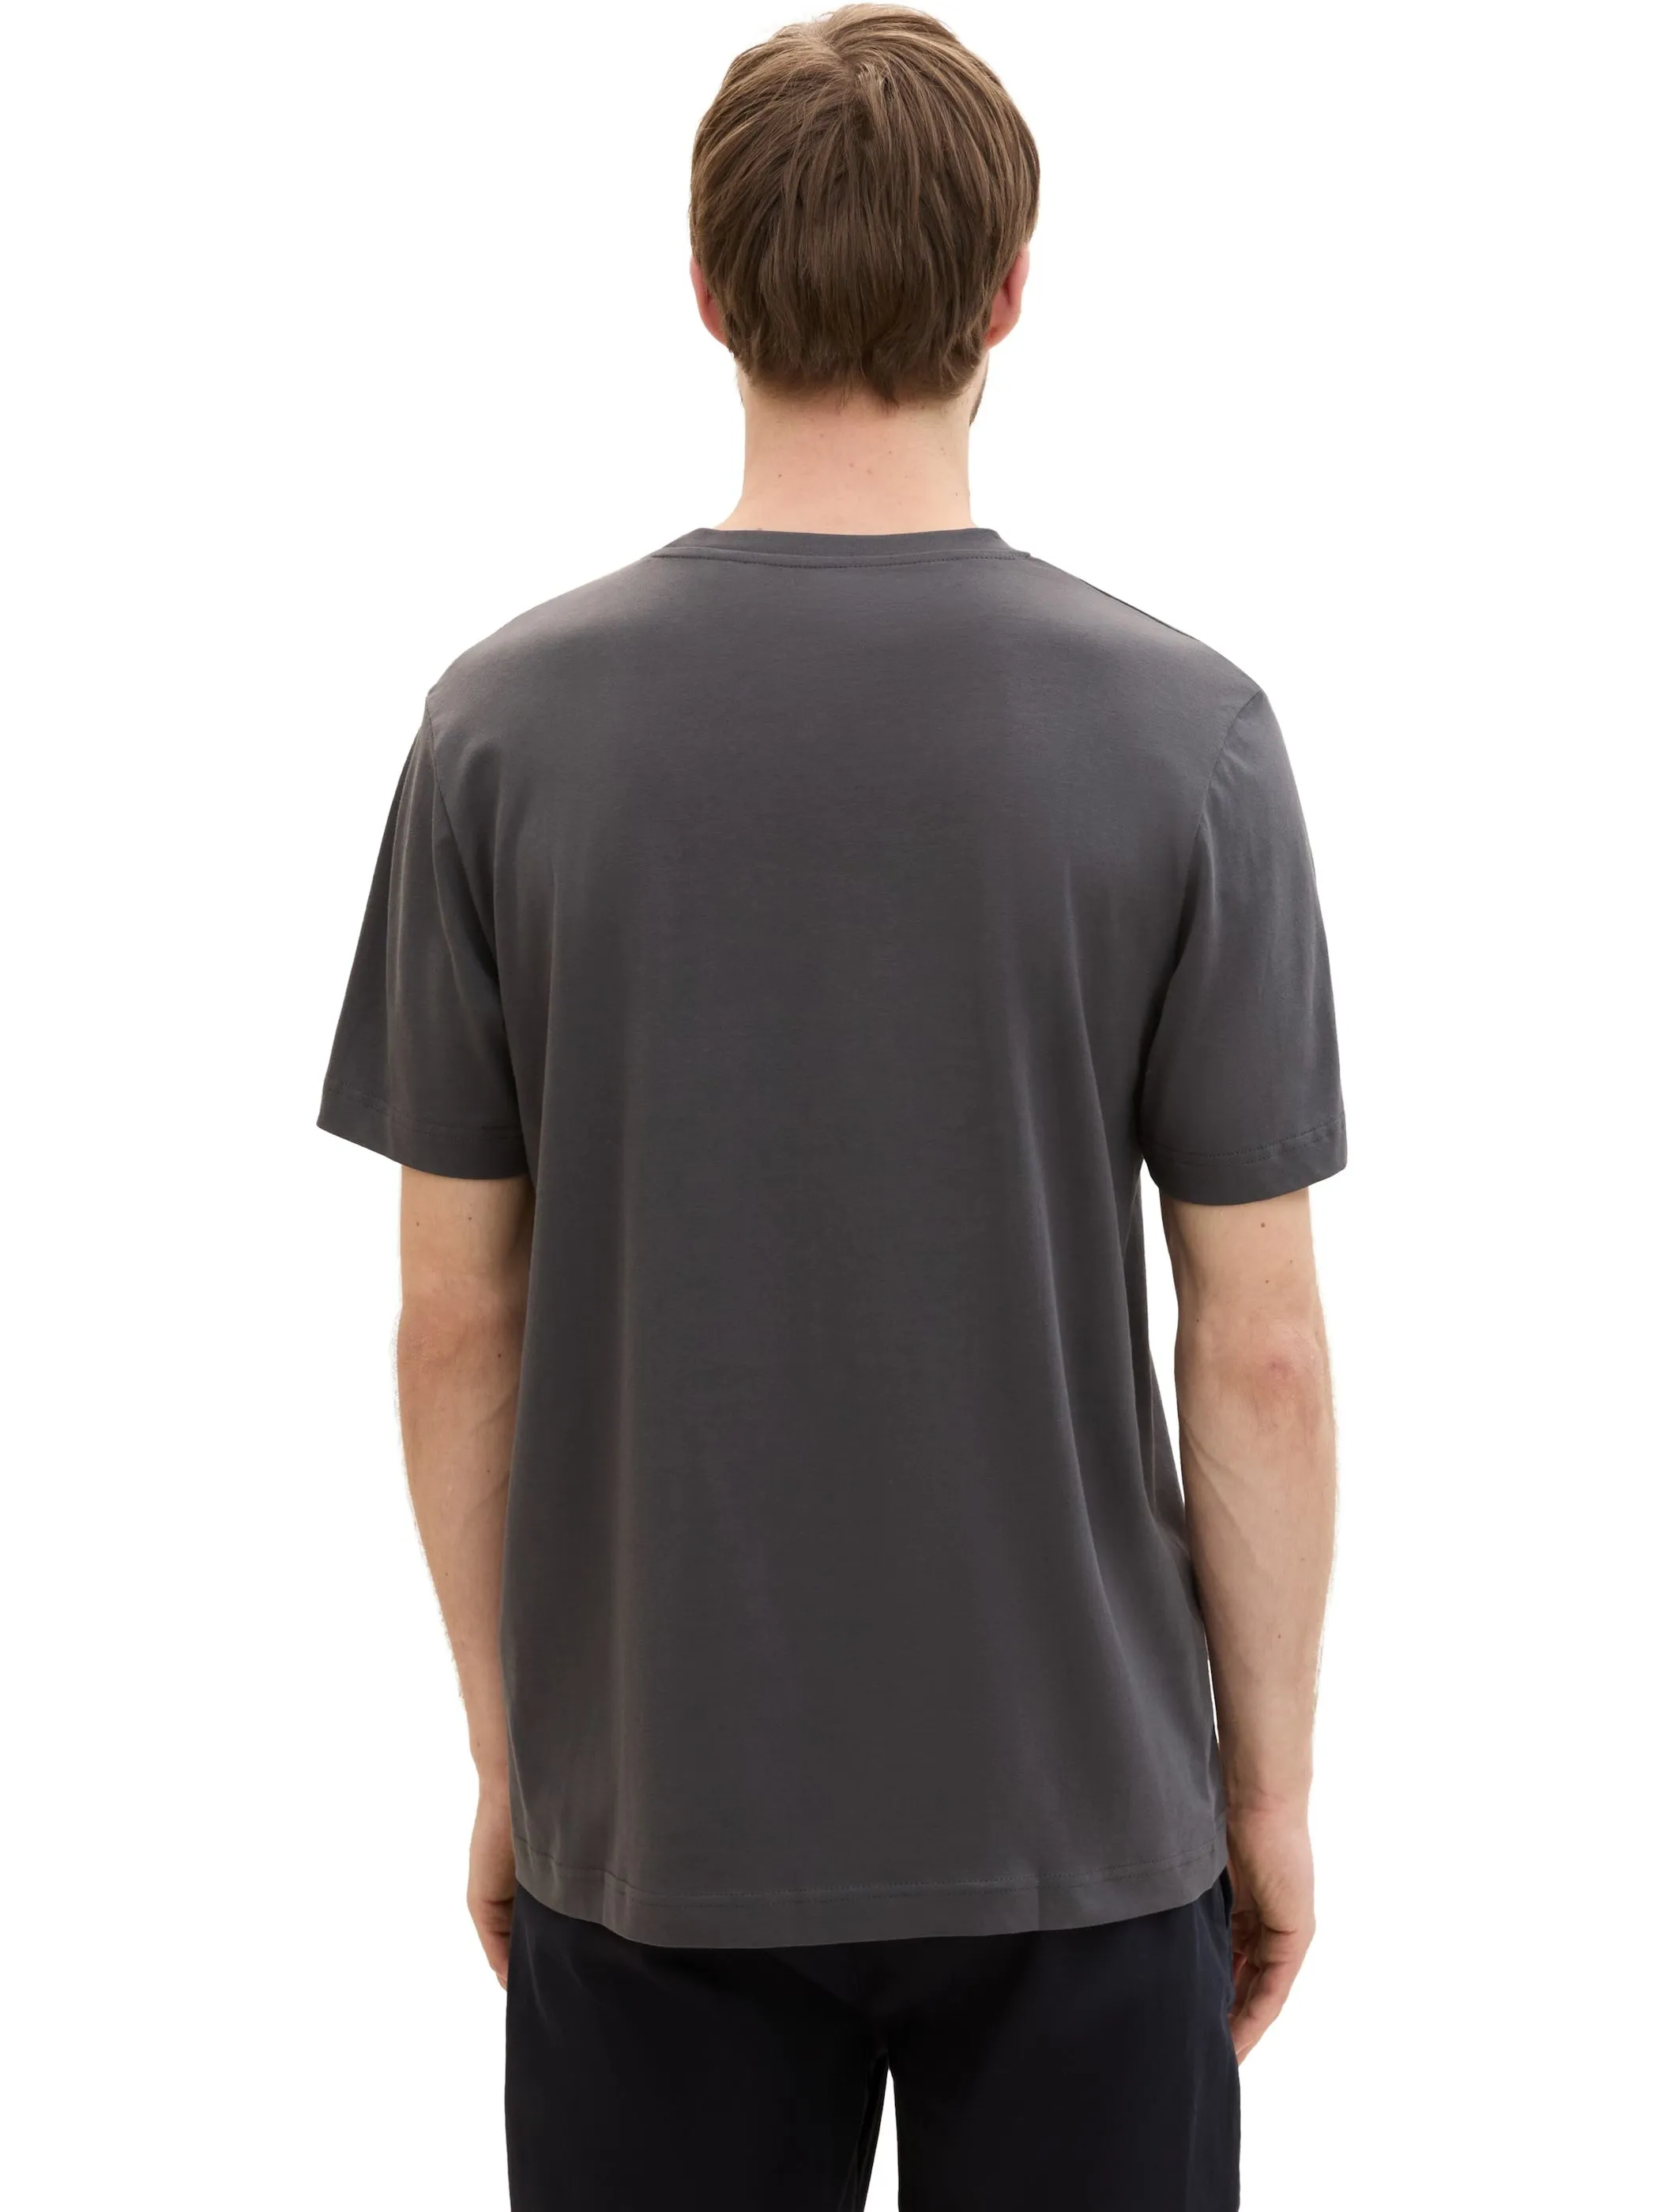 Tom Tailor 1043276 t-shirt with print Grau 898849 10899 2